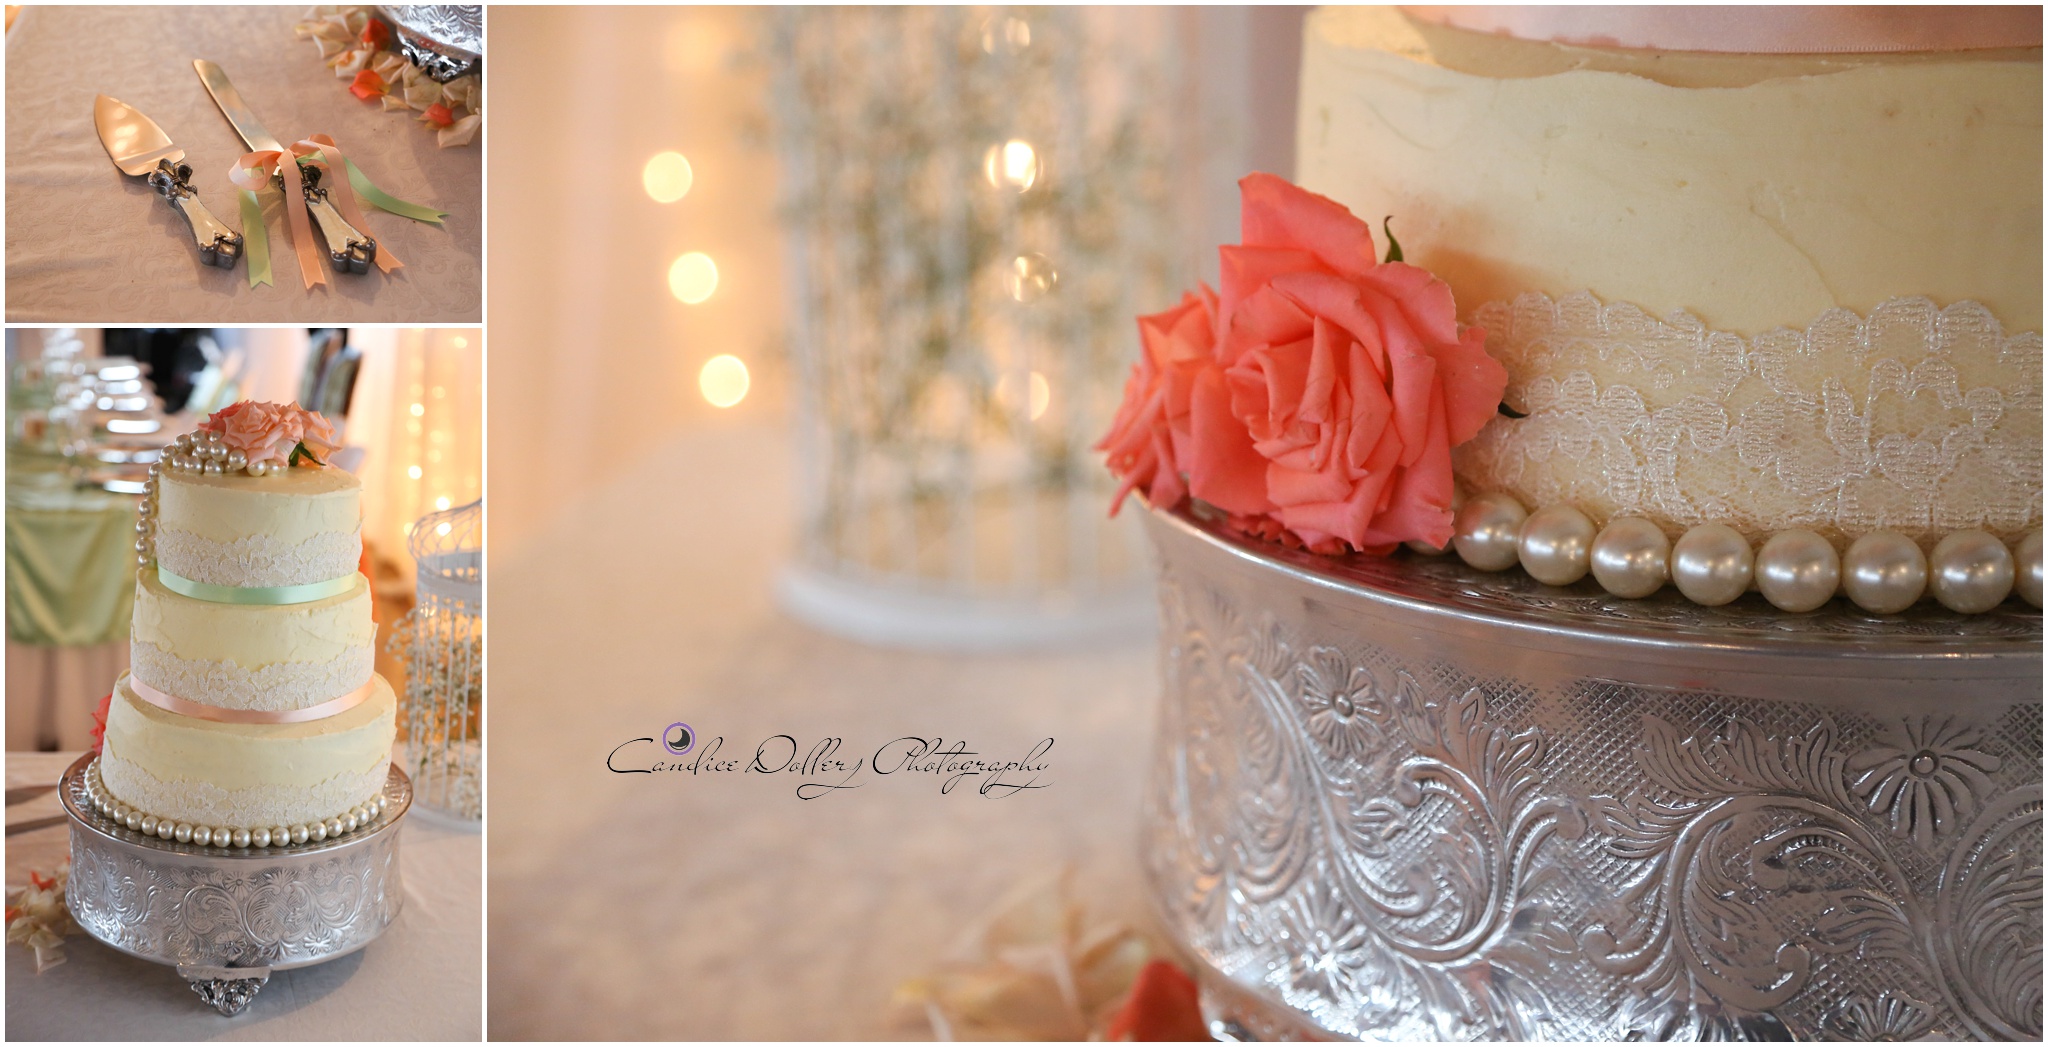 Paula & Jaycee's Wedding - Cypress Dale - Candice Dollery Photography_3062